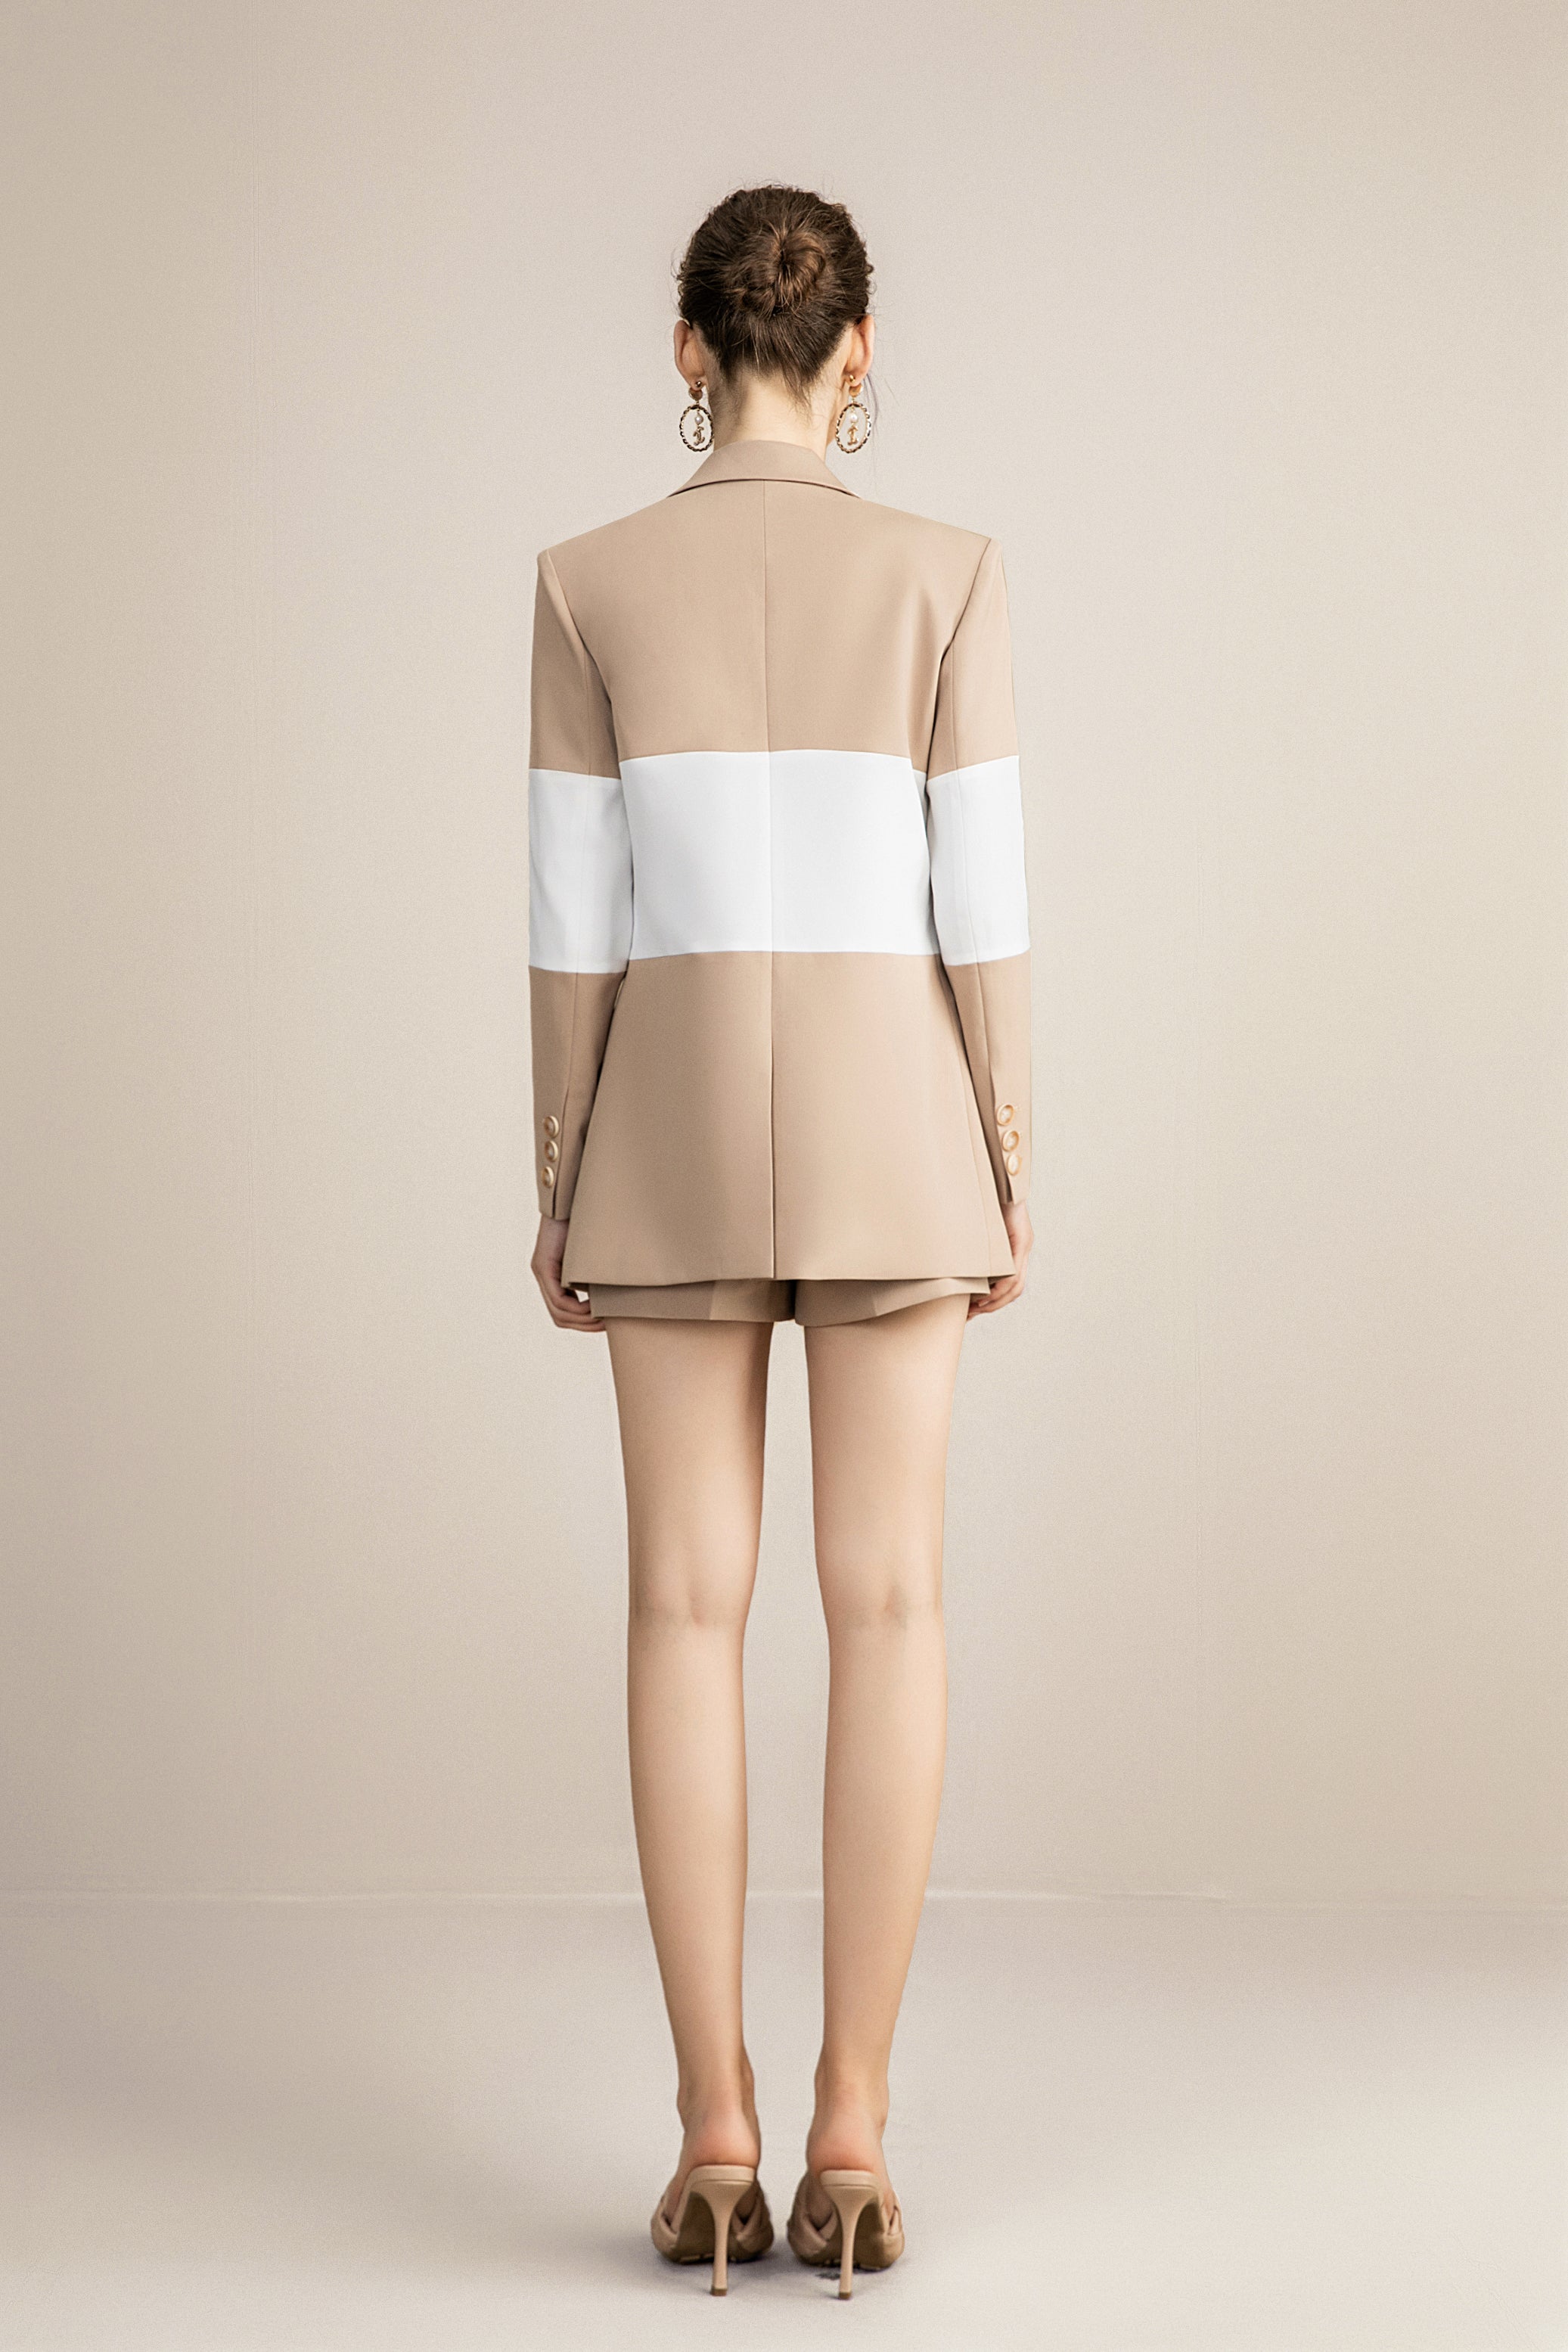 Khaki Color Block Blazer and Short Suits - FashionByTeresa